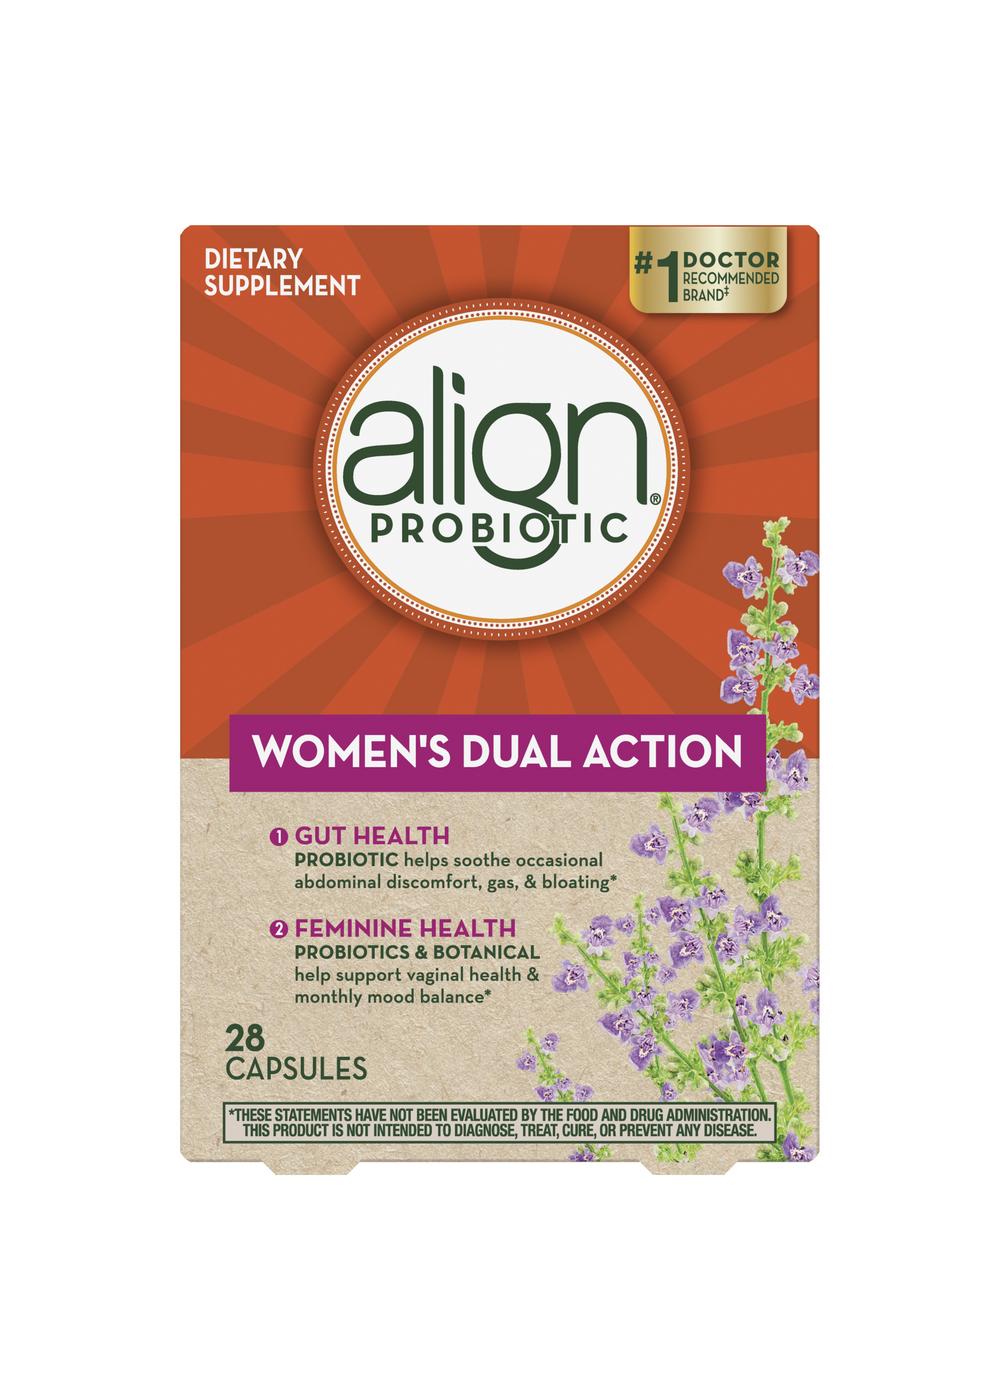 Align Probiotic Women's Dual Action Capsules; image 1 of 10